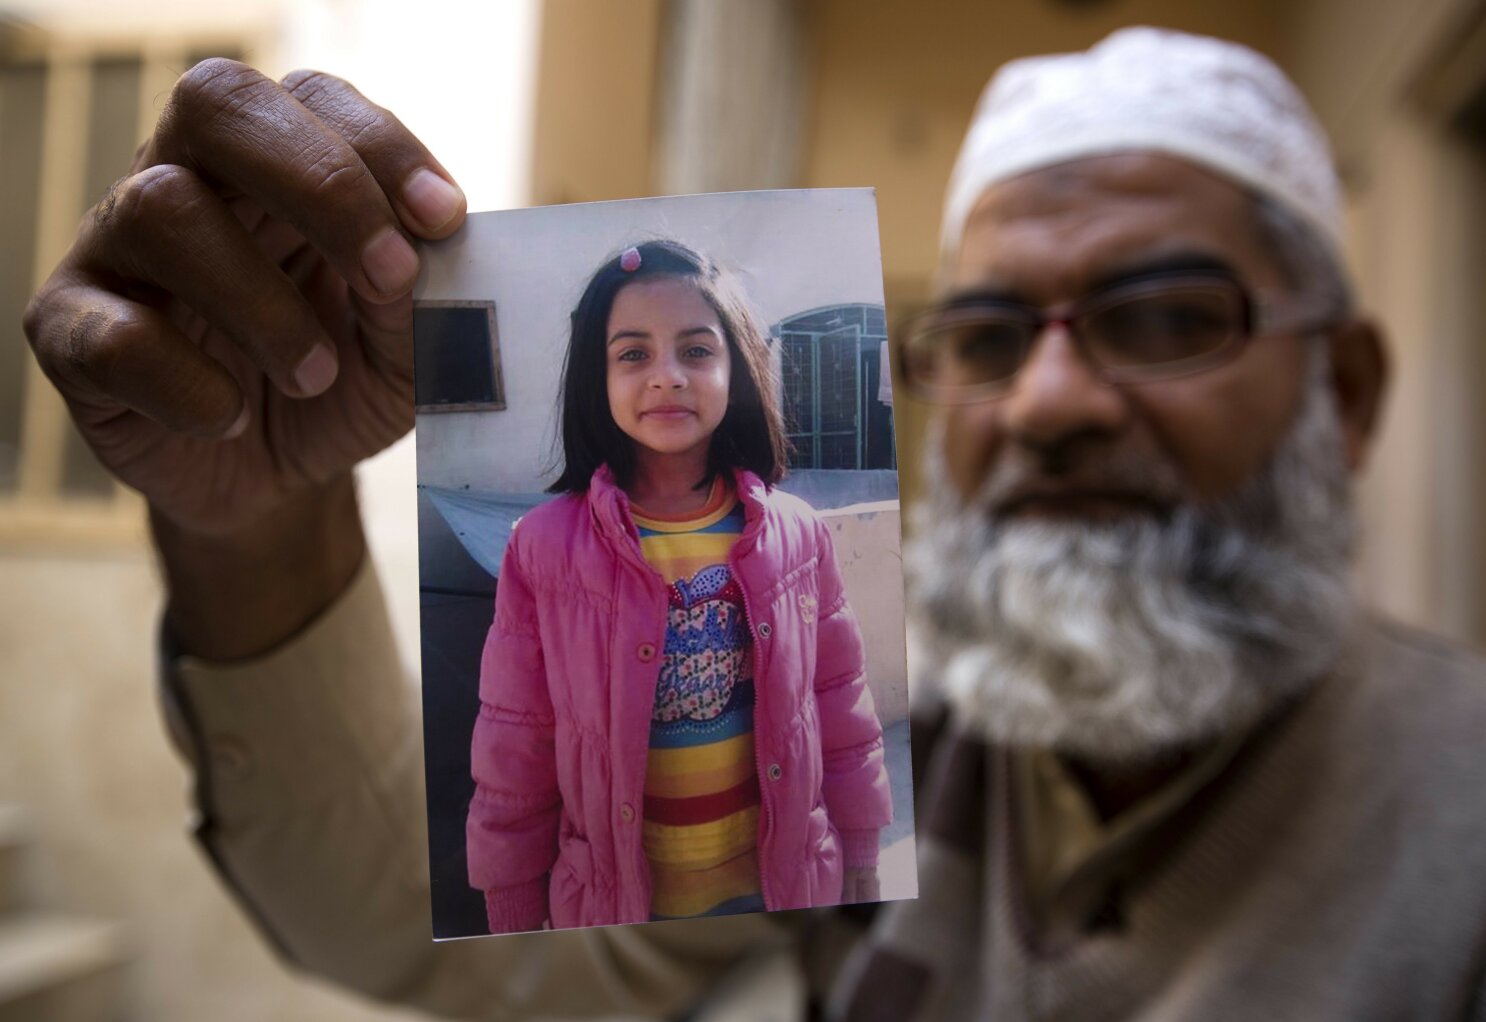 Pakistani Girl Forced Sex - After girl's killing, Pakistani women speak out on abuse | AP News